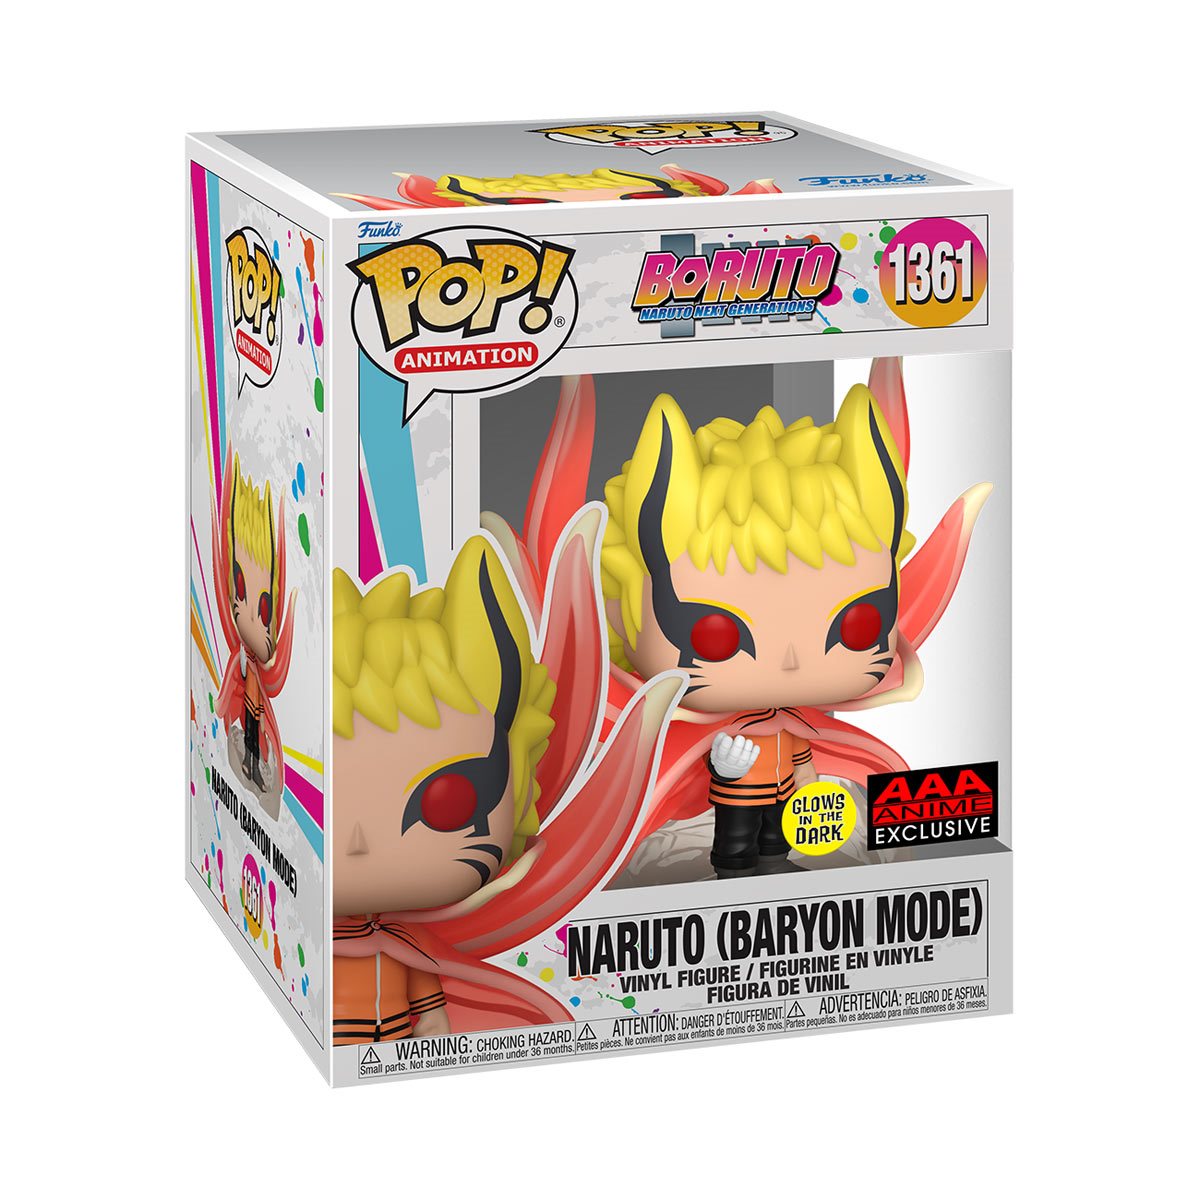 POP! Animation: Boruto - Naruto (Baryon Mode)(Glow) #1361 (AAA Anime Exclusive)